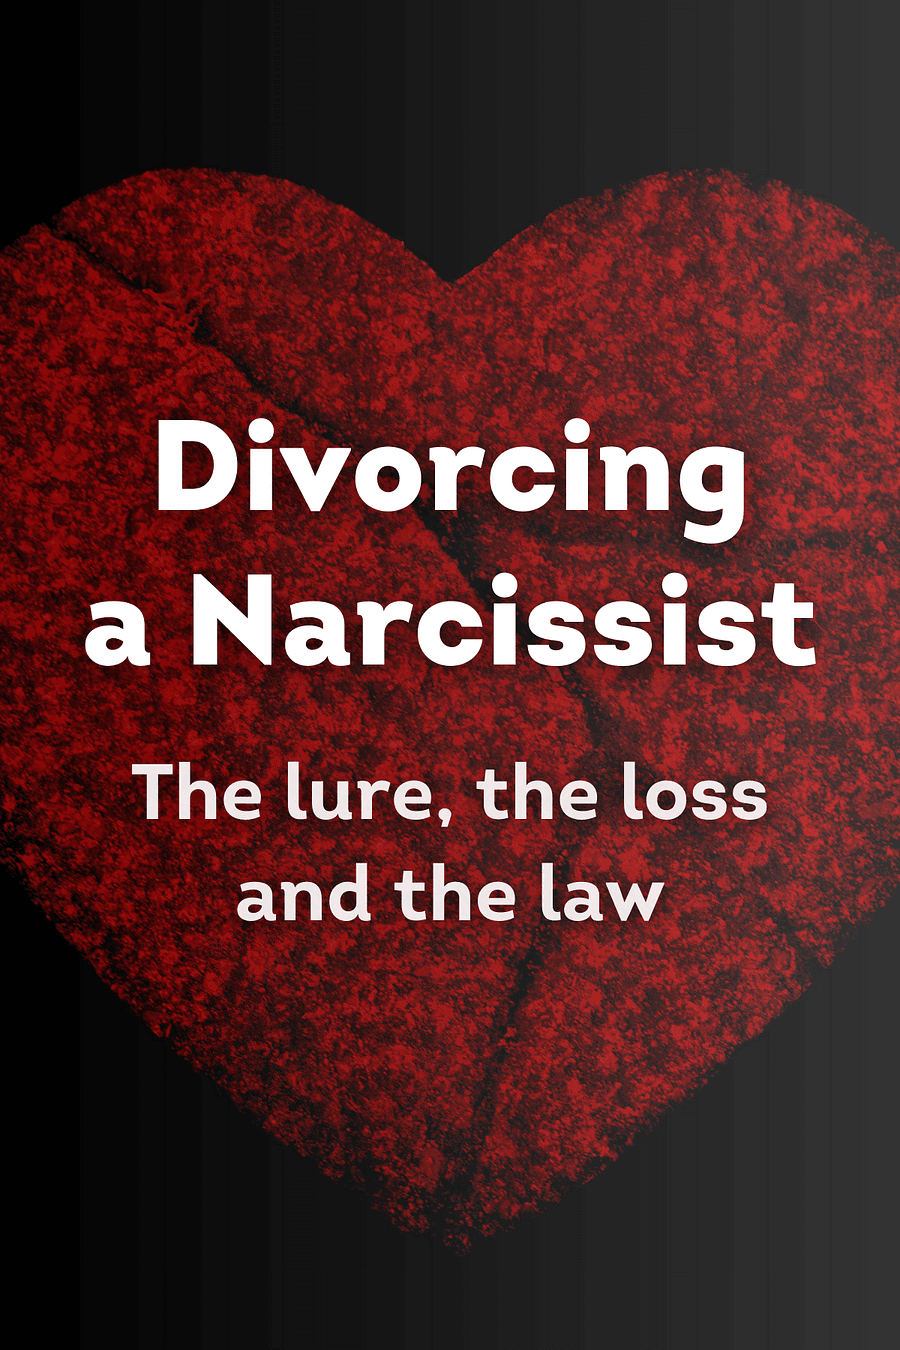 Divorcing a Narcissist by Supriya McKenna, Karin Walker - Book Summary